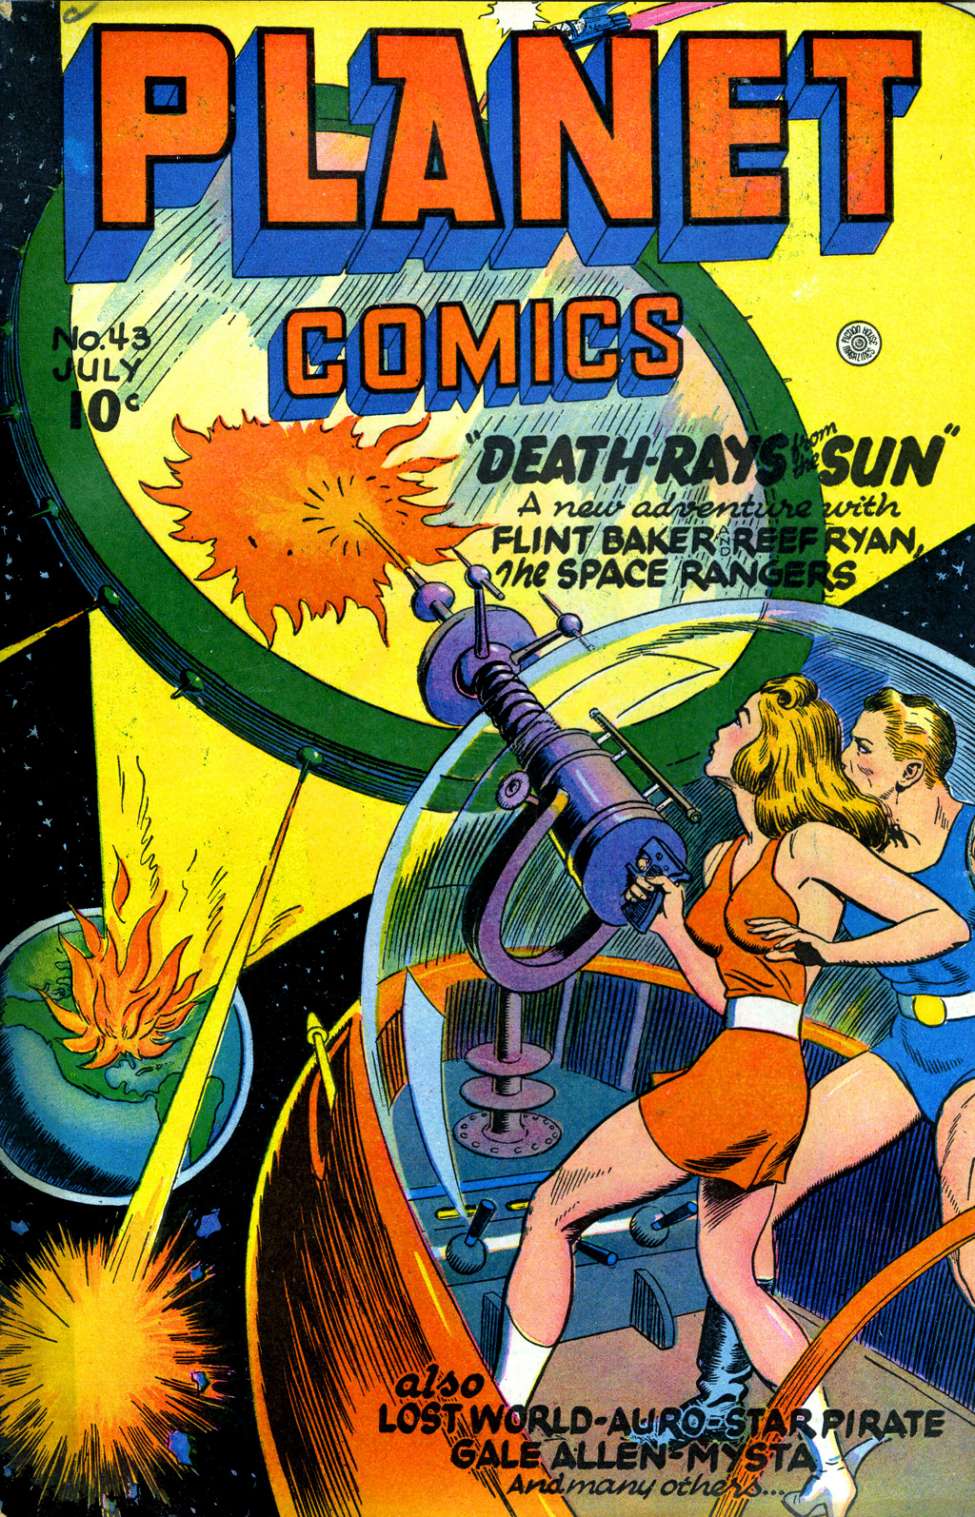 Planet Comics #43, Fiction House